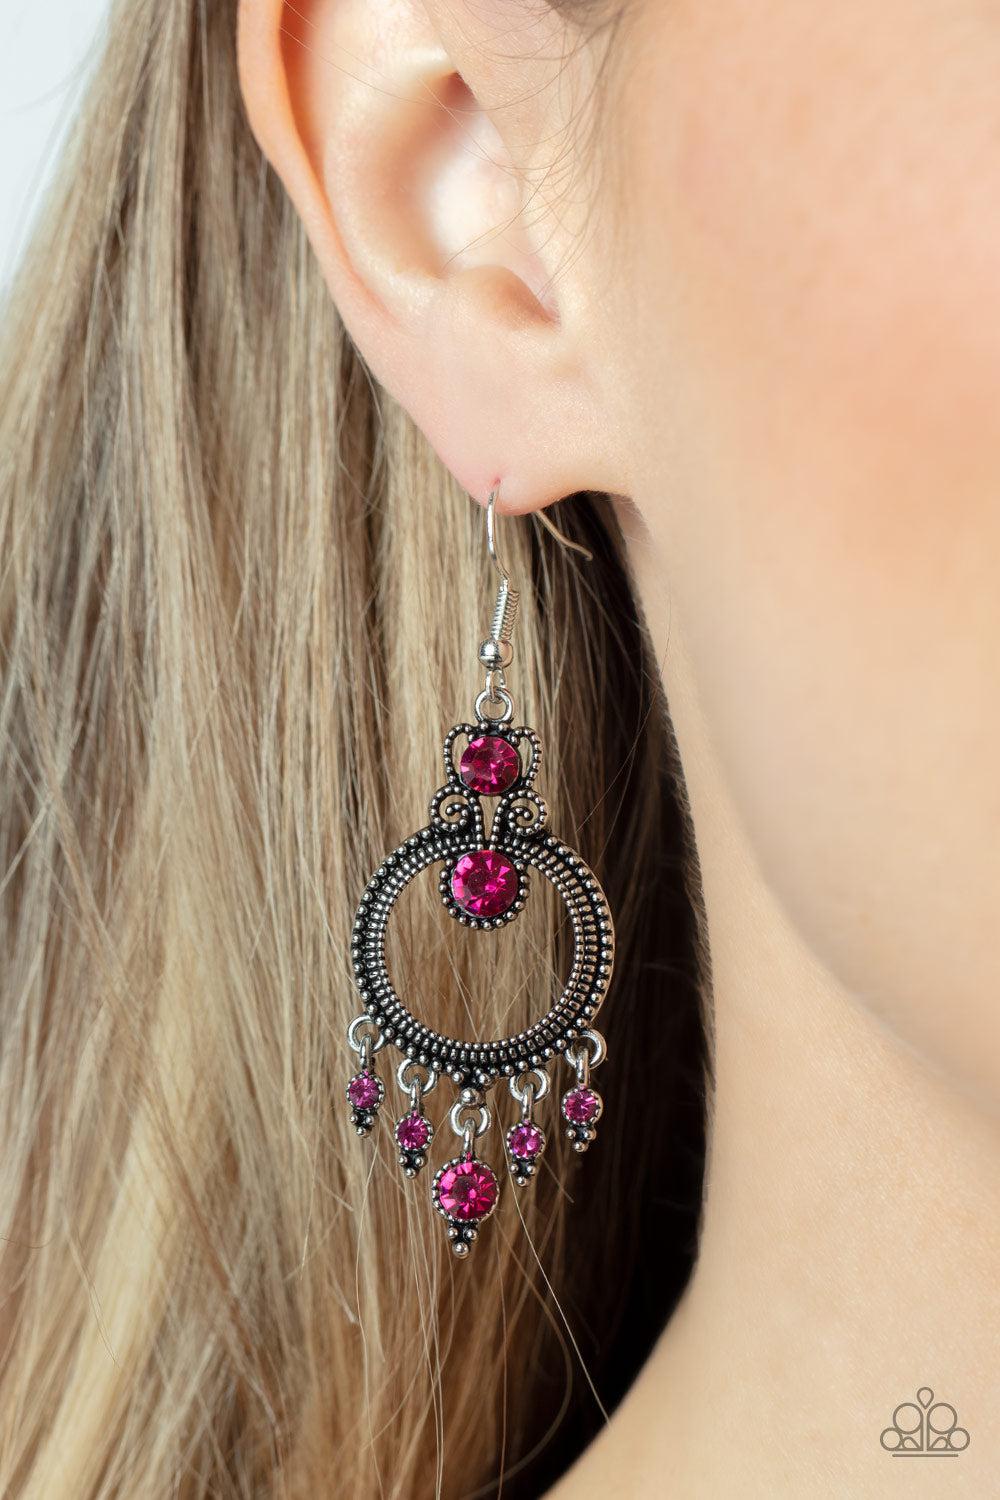 Palace Politics Pink Rhinestone Earrings - Paparazzi Accessories- lightbox - CarasShop.com - $5 Jewelry by Cara Jewels